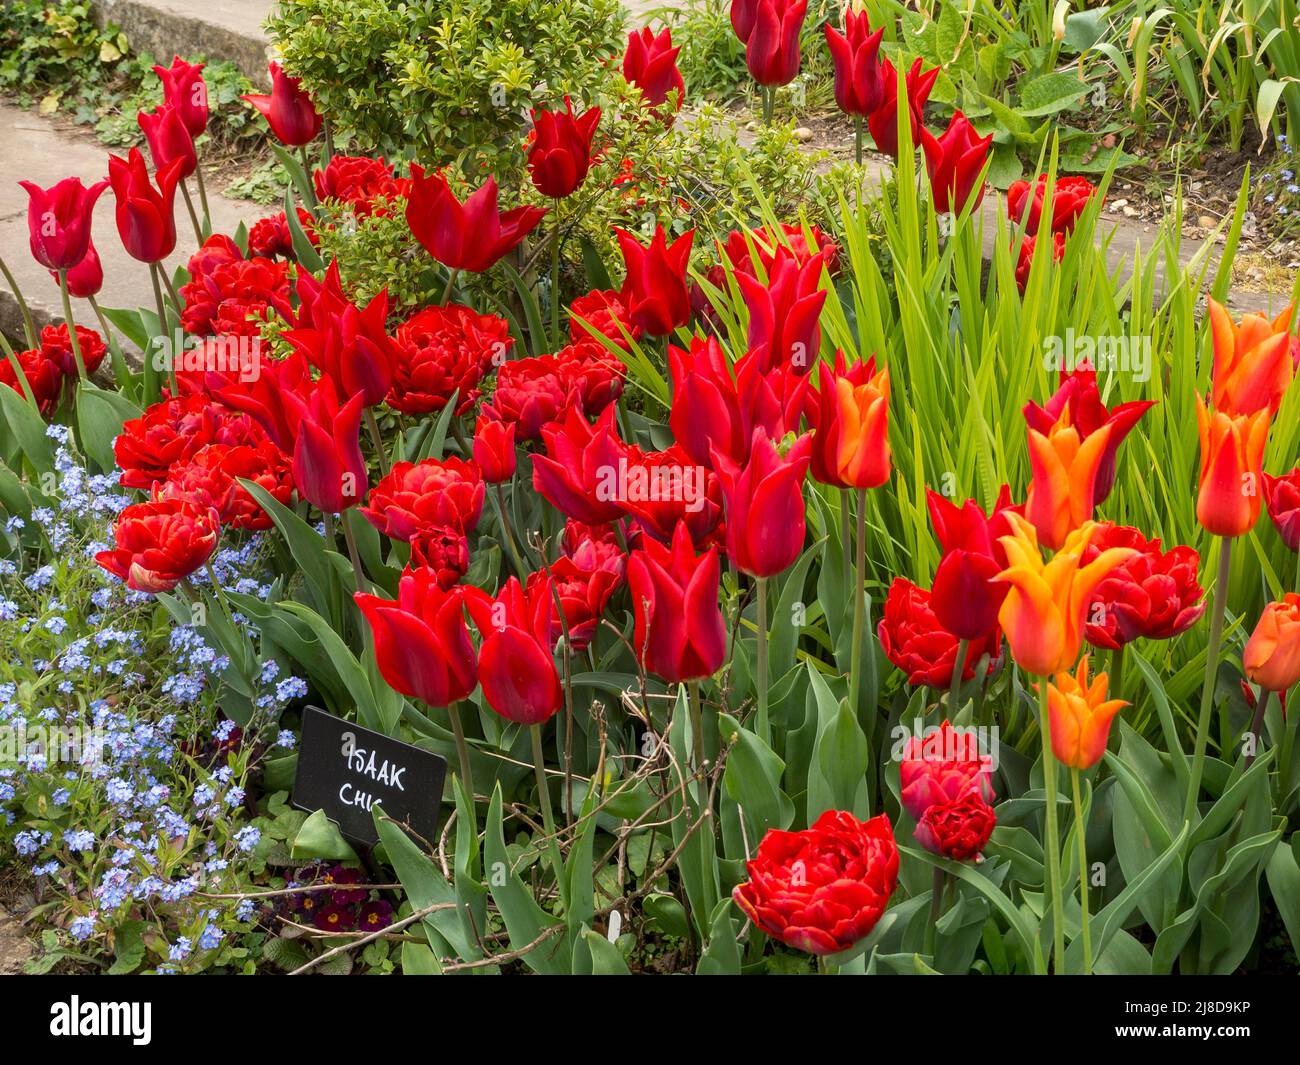 Chenies Manor Garden Vivrant Rote und orange Tulpenvariantie, Tulipa 'Isaak Chic', Tulipa 'Rote Prinzessin', Tulipa 'Ballerina'. Blaue Myostis. Stockfoto